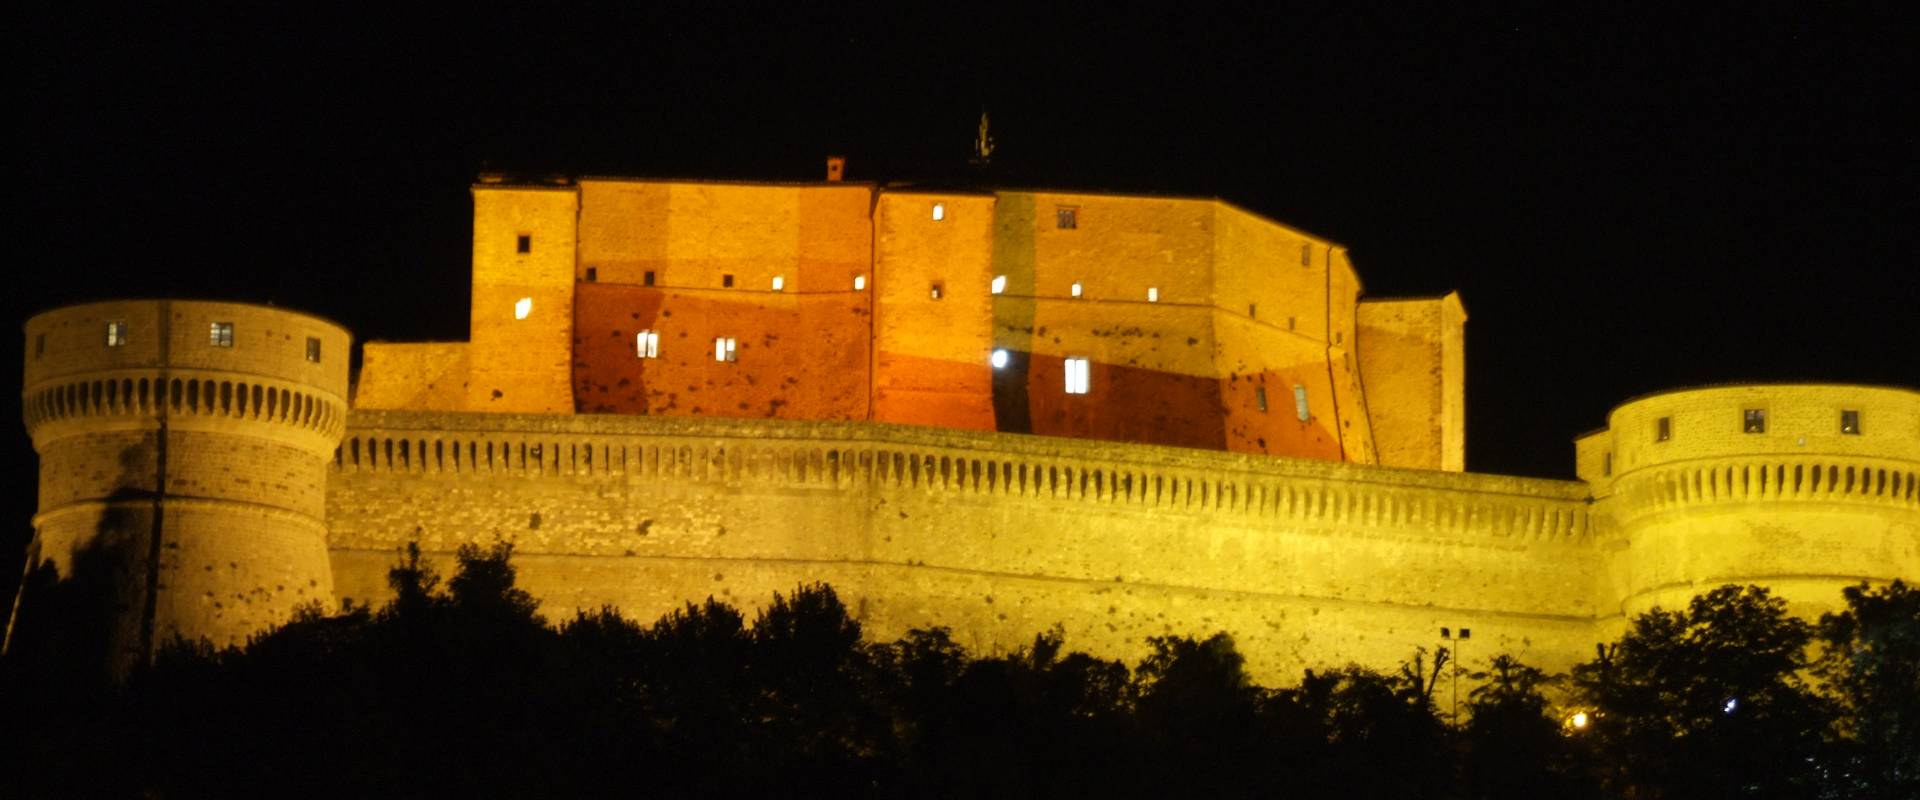 Fortezza di San Leo - 33 photo by Diego Baglieri